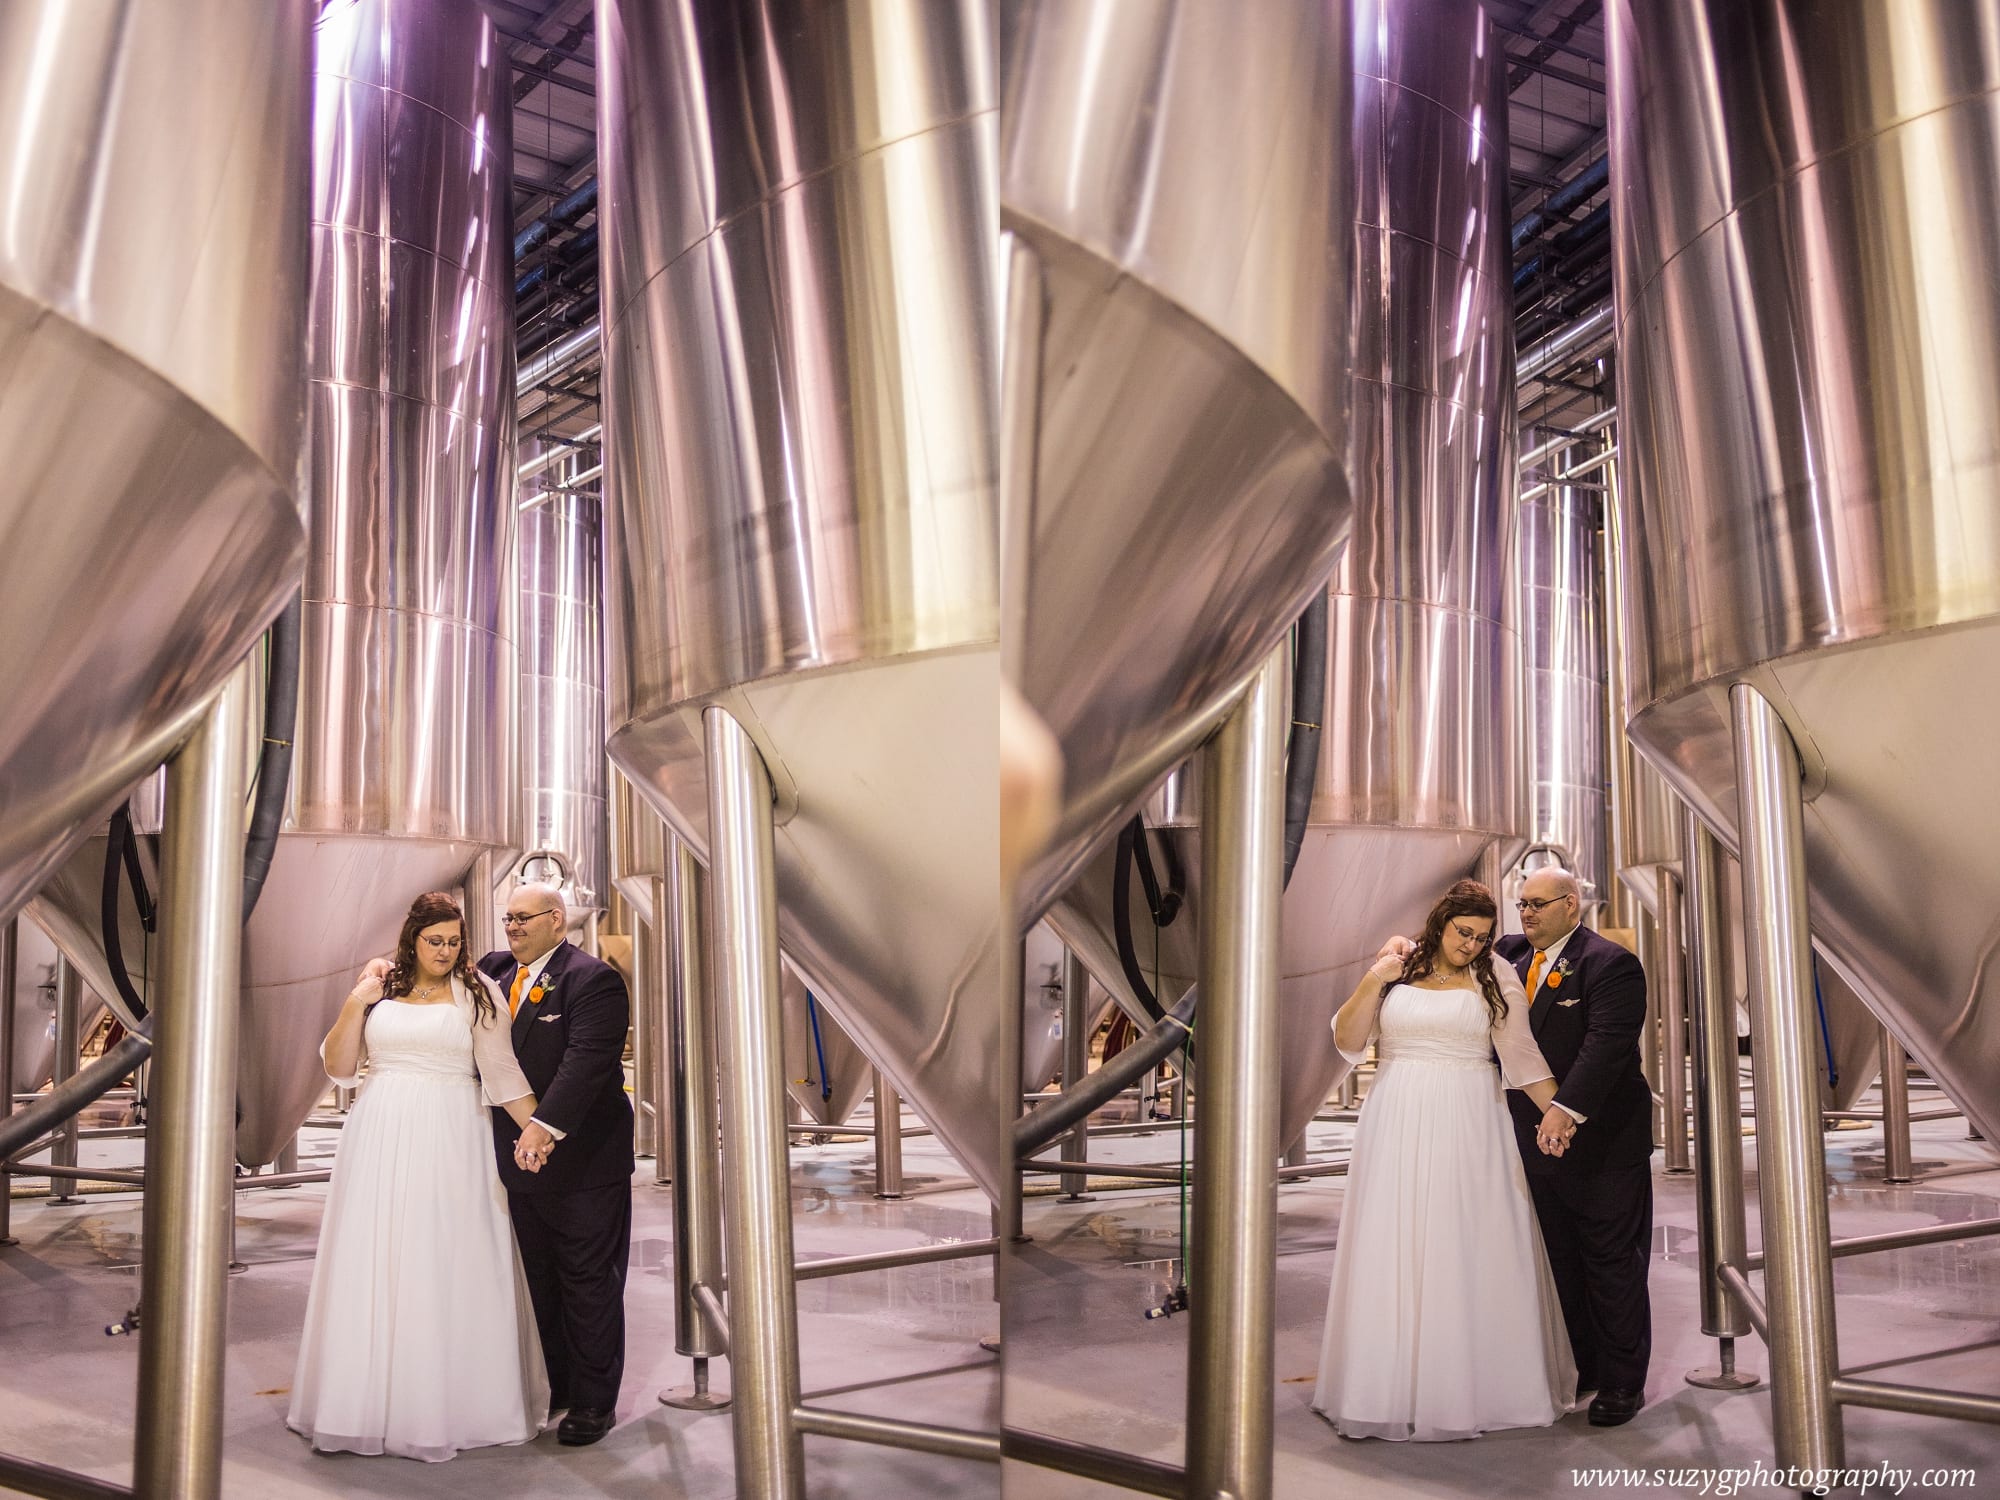 Abita Brewerry- abita--new orleans wedding-nola-suzyg-suzy-g-photography-weddings-wedding photography_0036